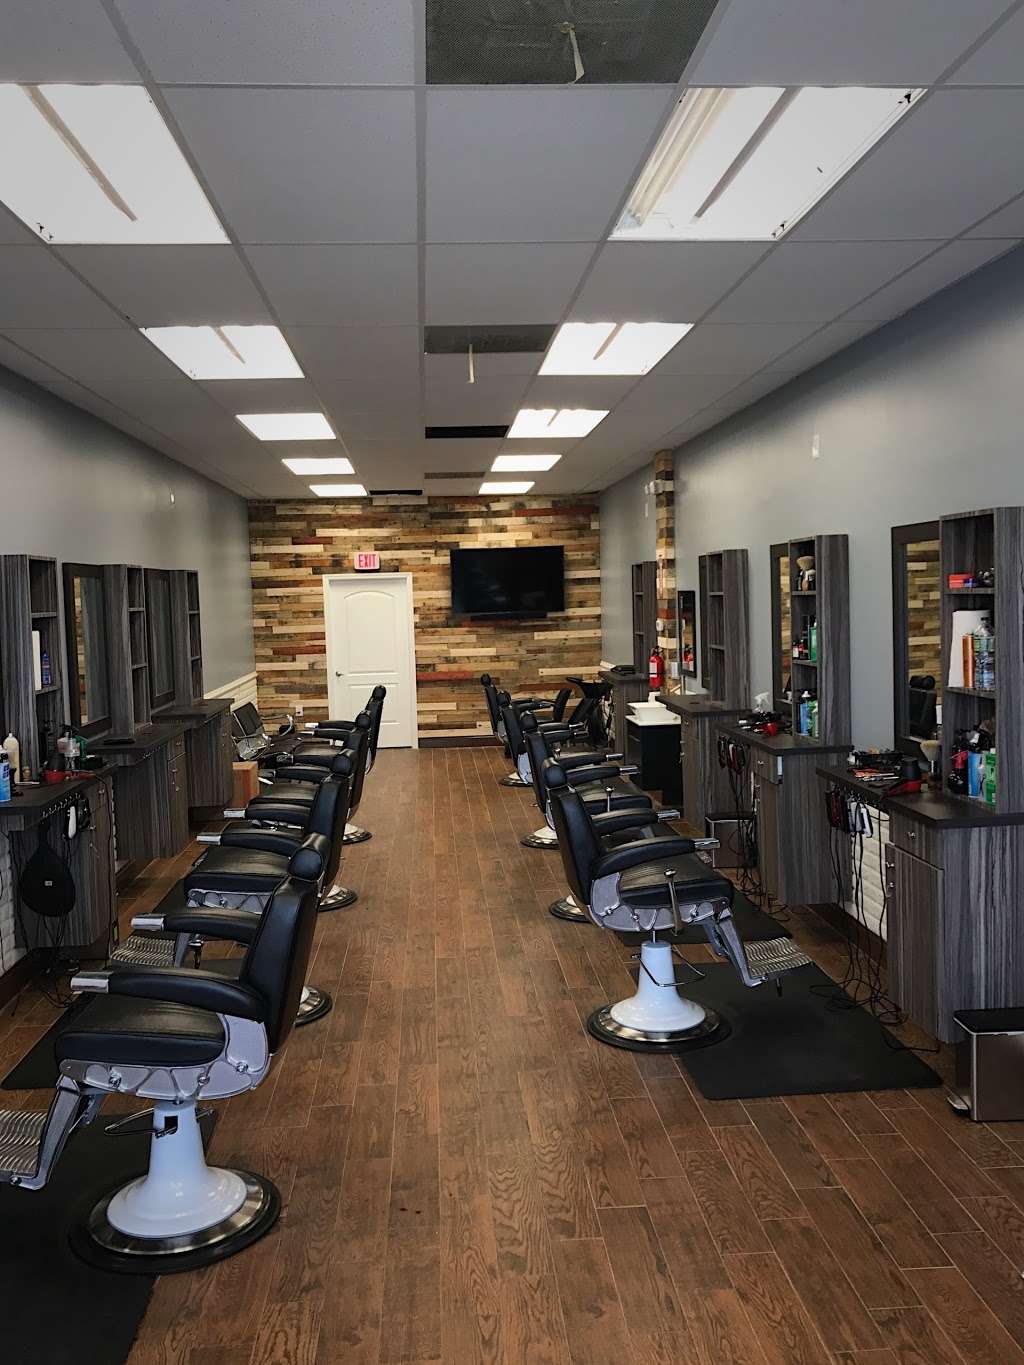 The Standard Barbershop | 1195 Sunrise Hwy, Copiague, NY 11726 | Phone: (631) 800-9404